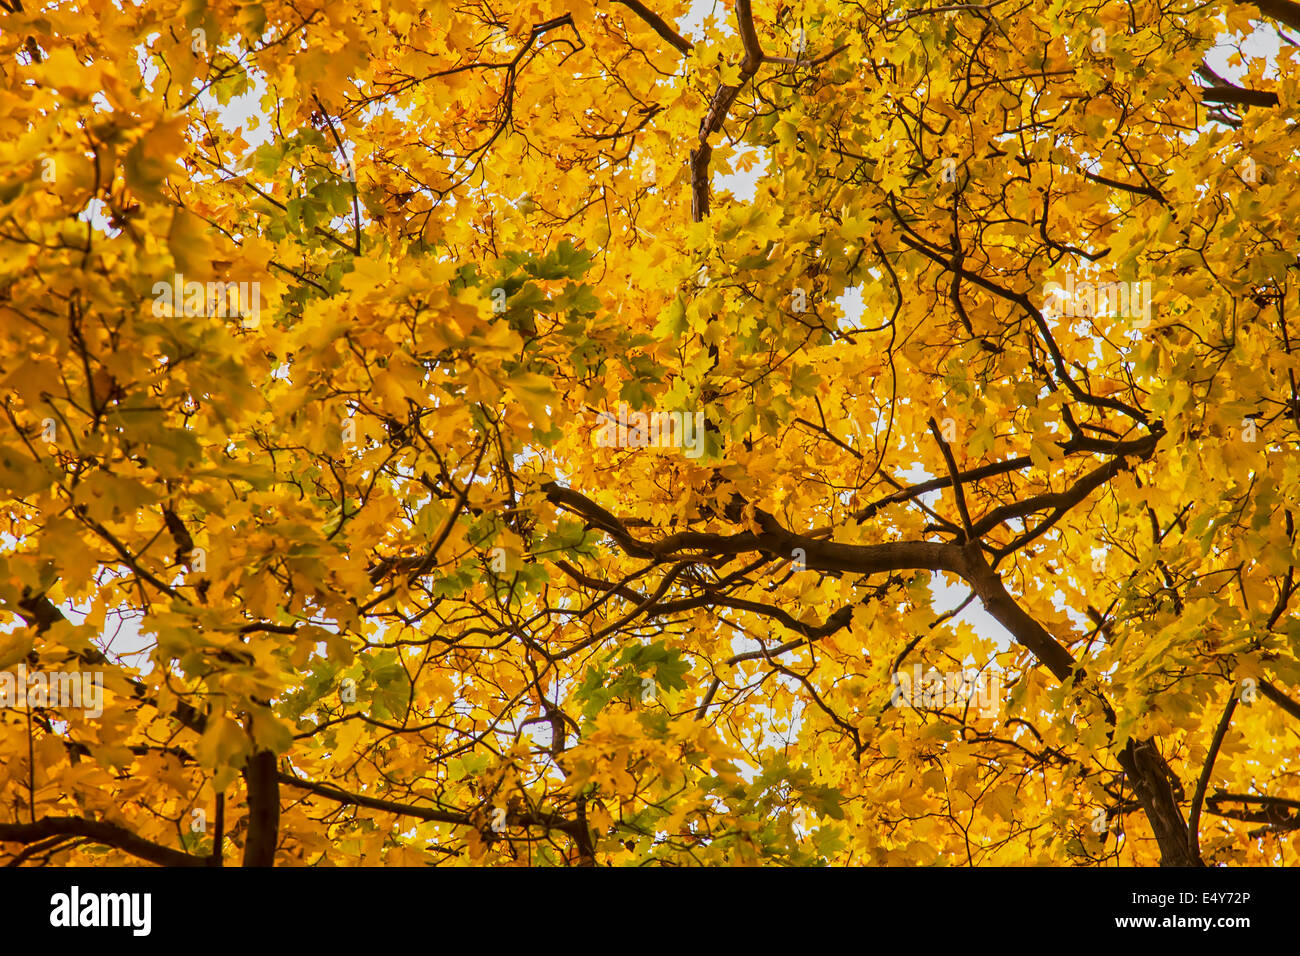 Autumnal golden foliage on trees Stock Photo